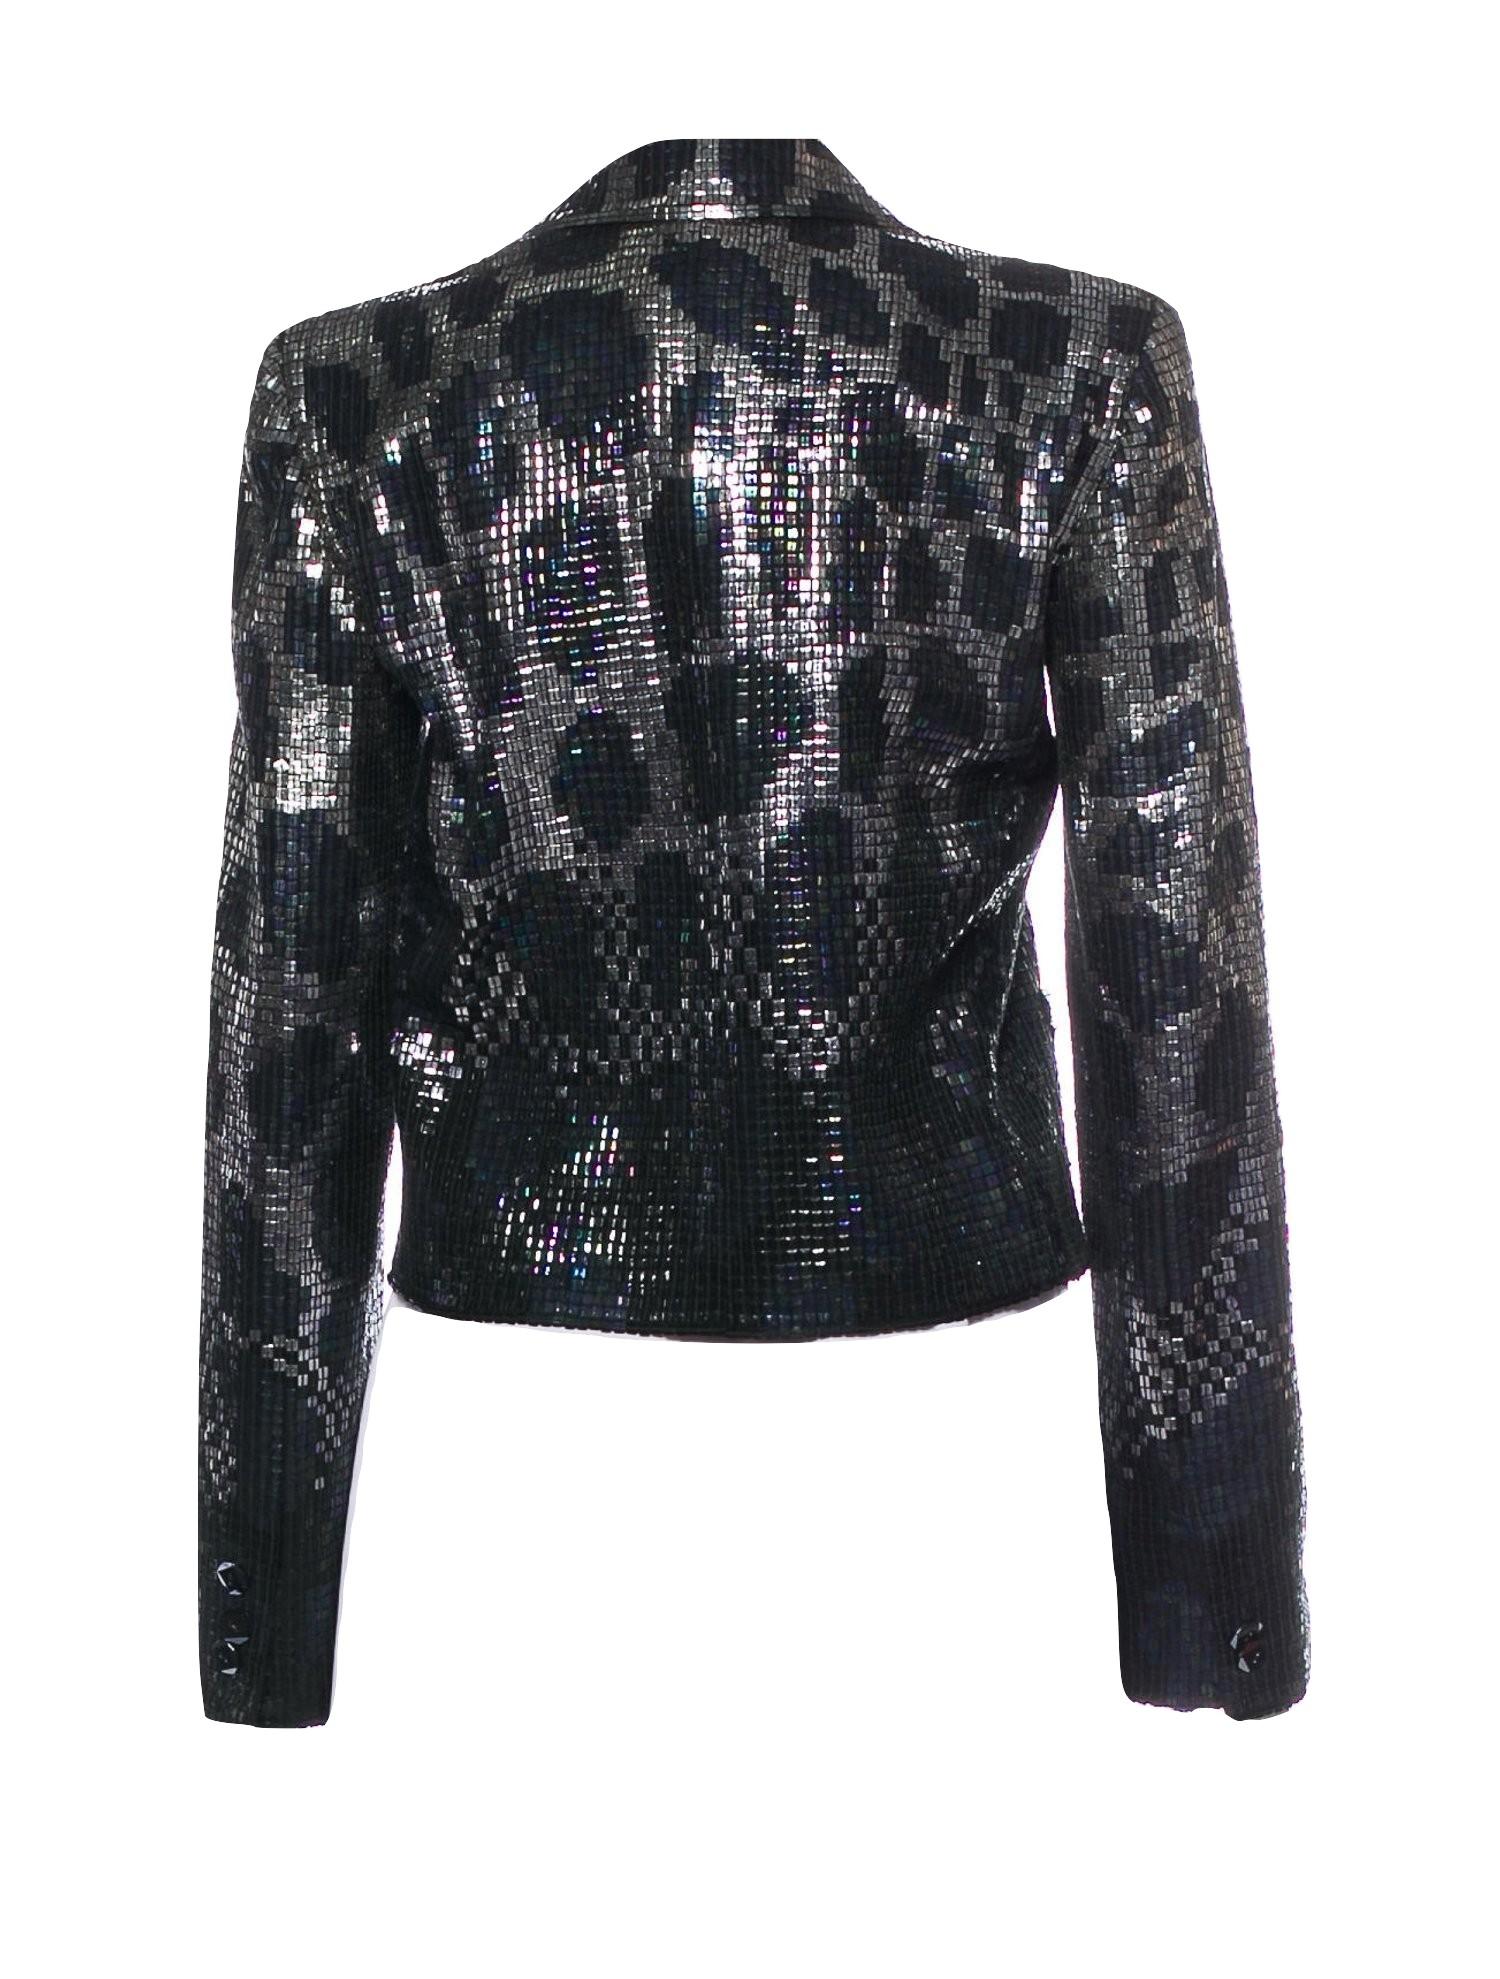 New Gucci F/W 2009 Sienna Miller Runway Ad Evening Coat Jacket Gaga $4650 4